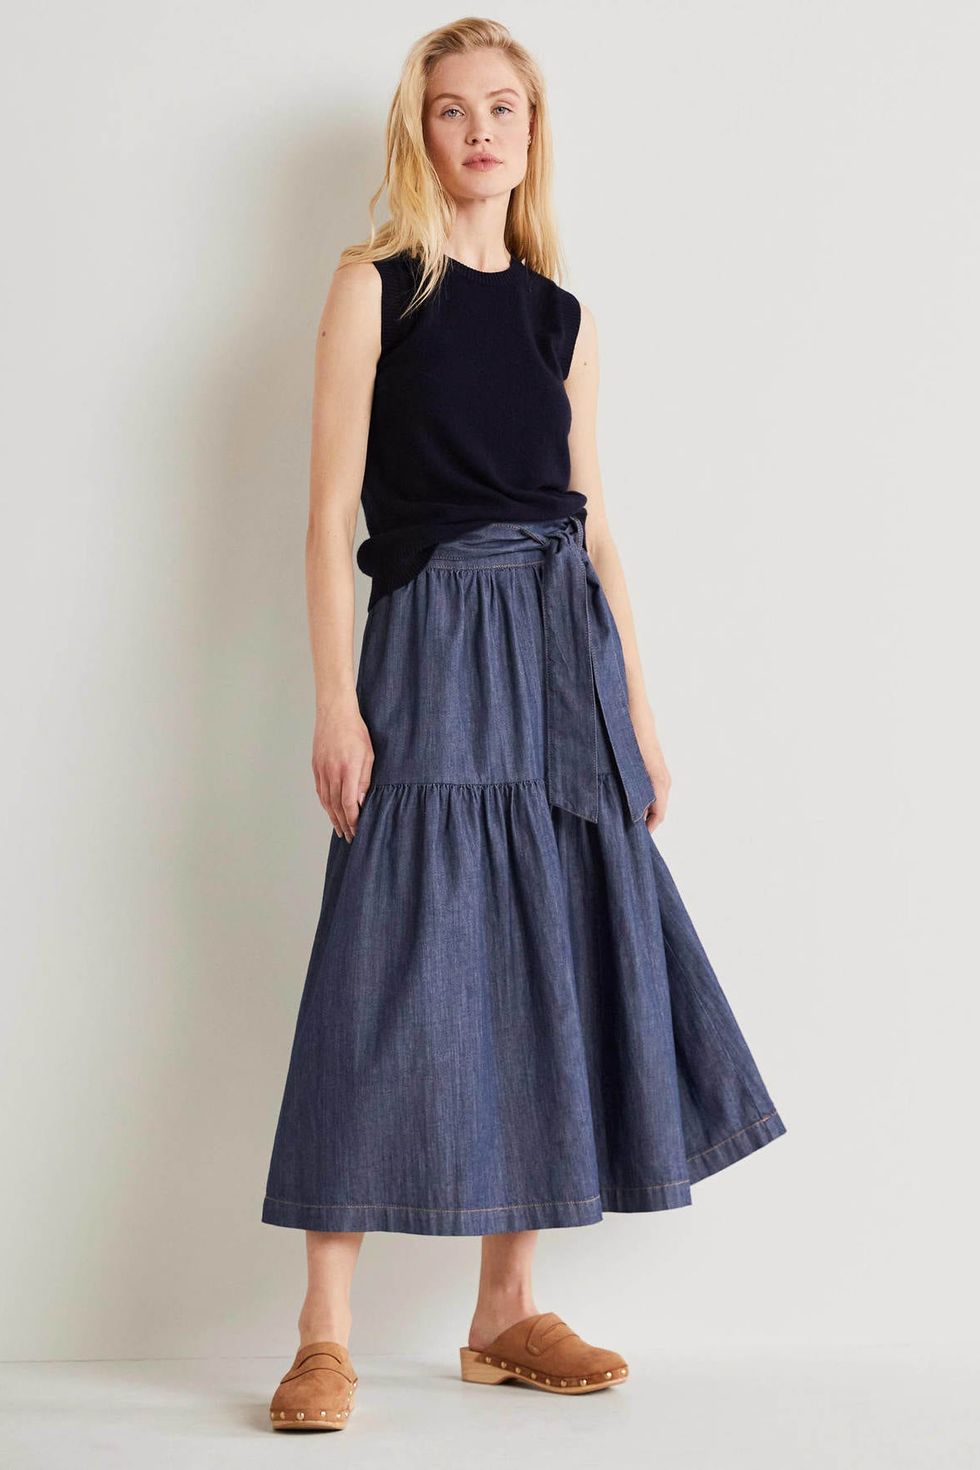 Boden tiered midi skirt: Boden sells a skirt to wear all summer